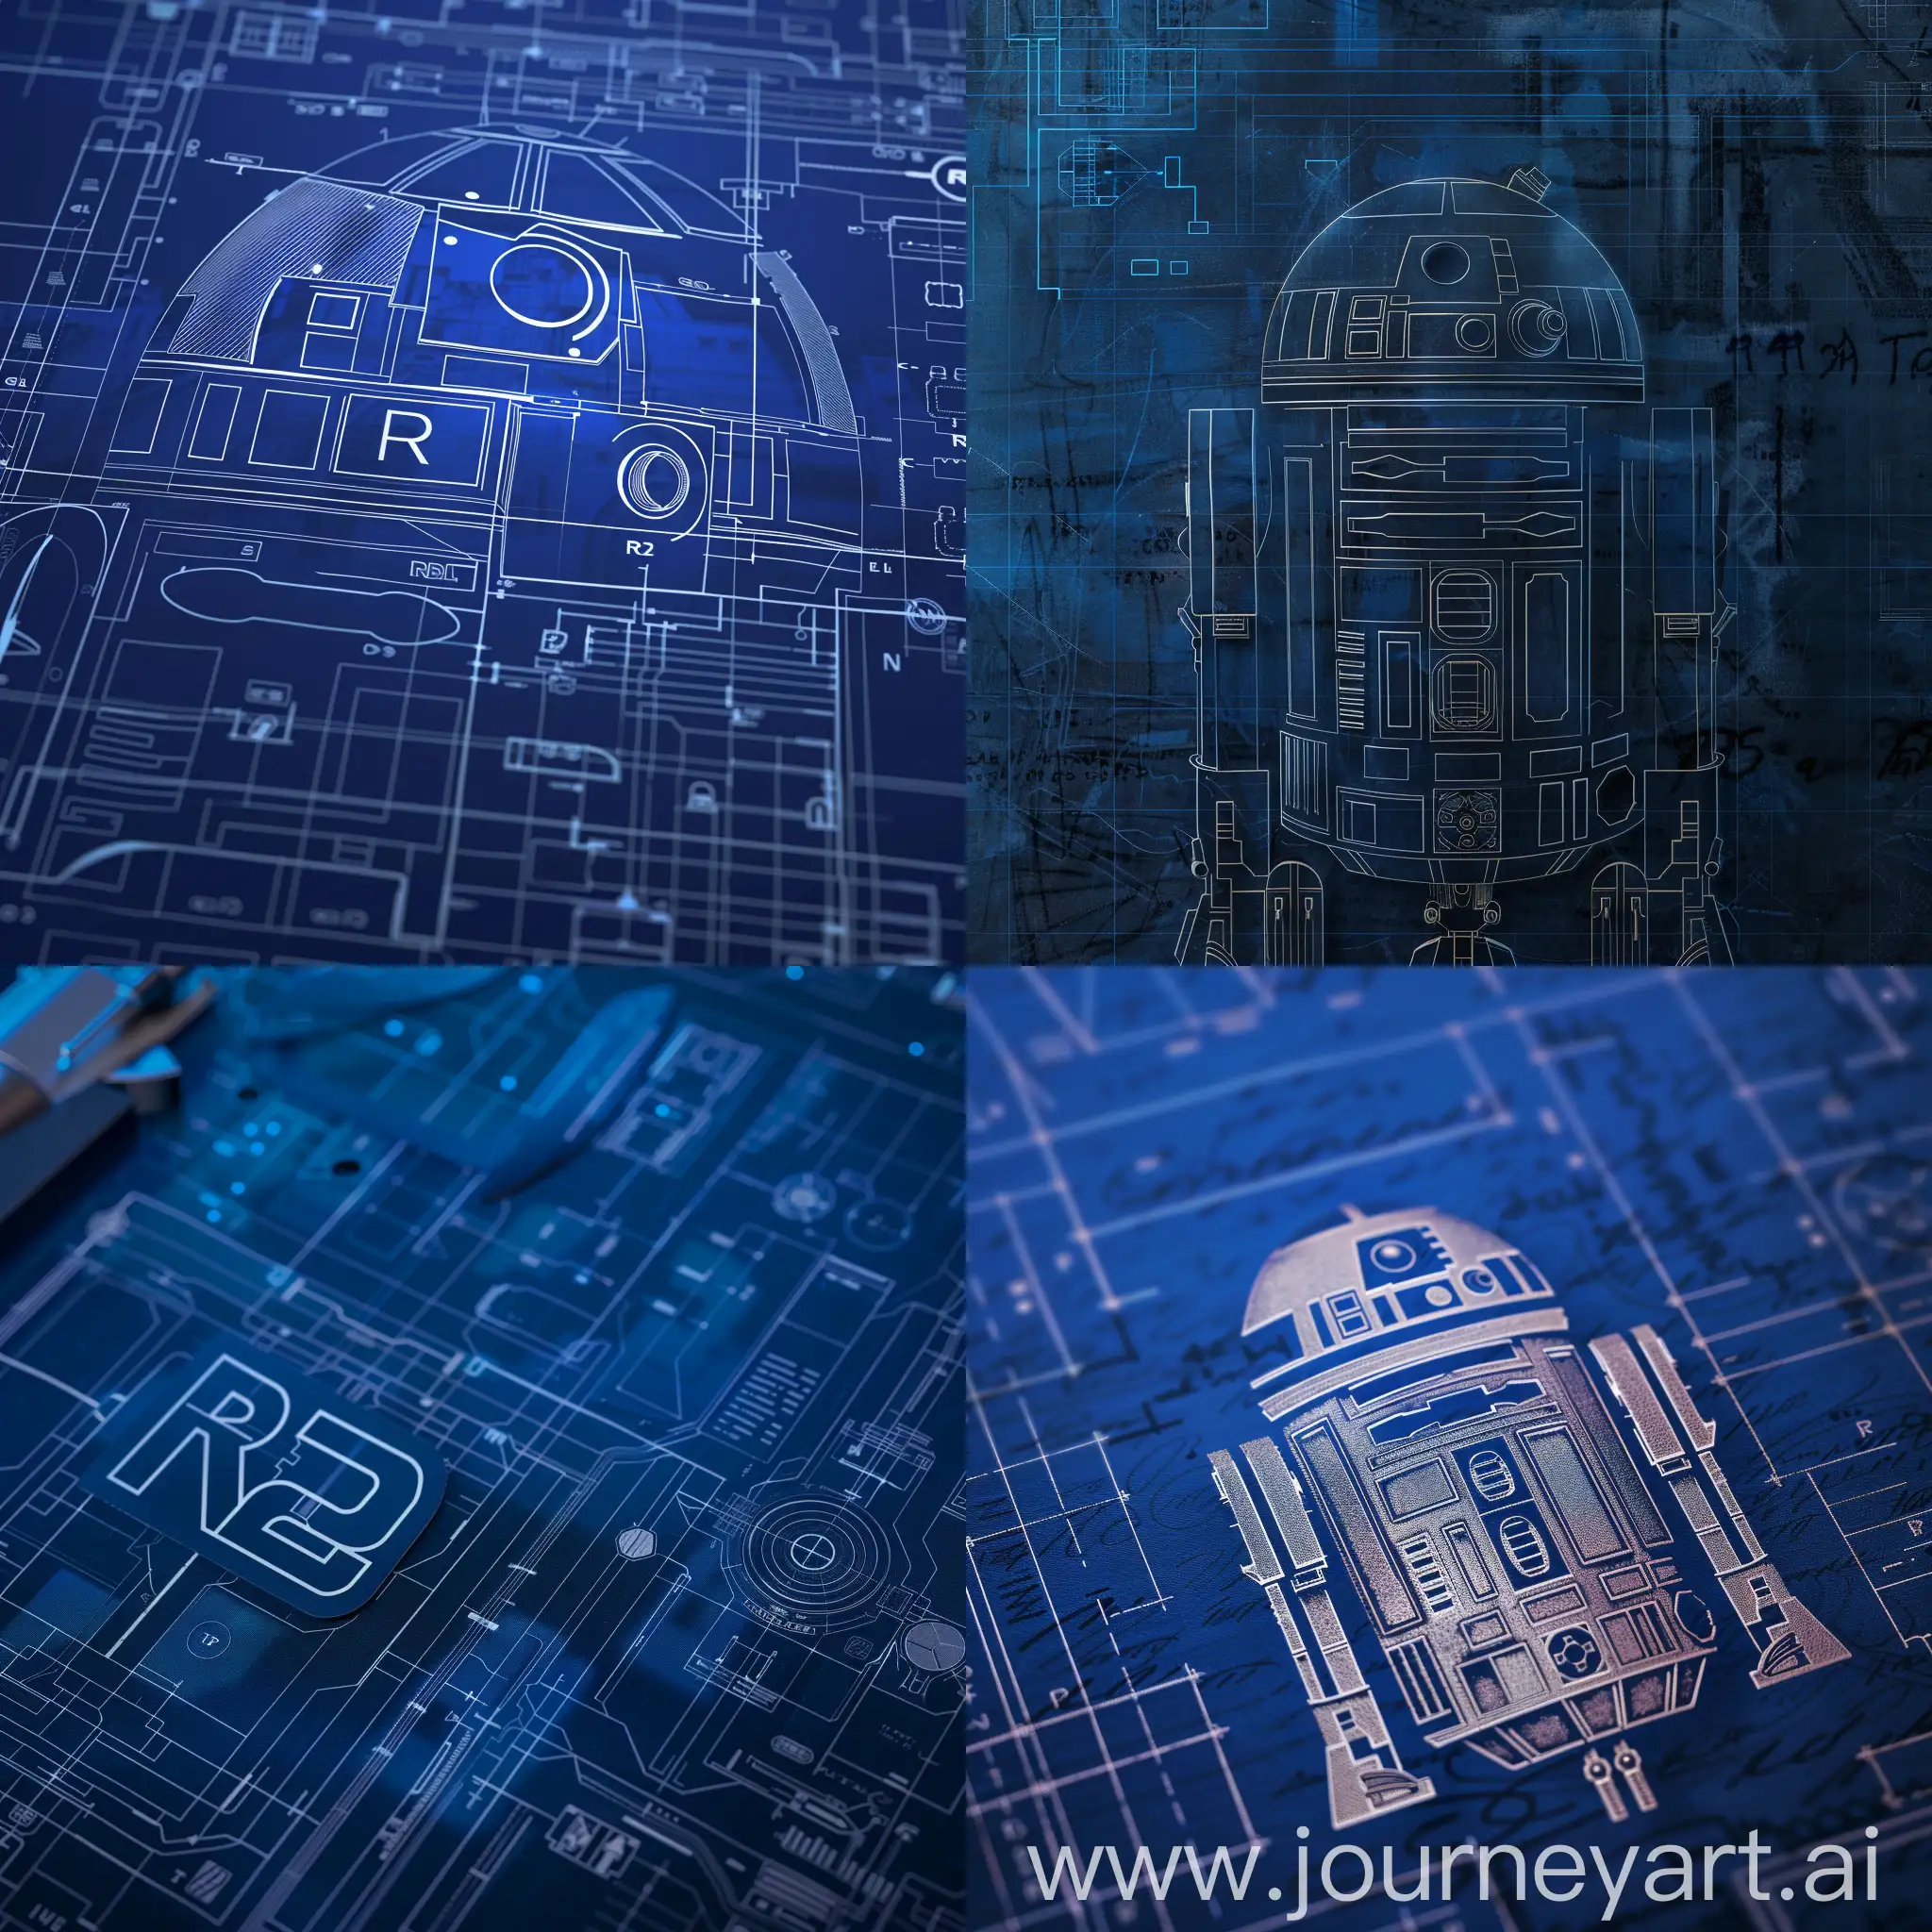 R2 logo in dark blue collors blueprint on back ground